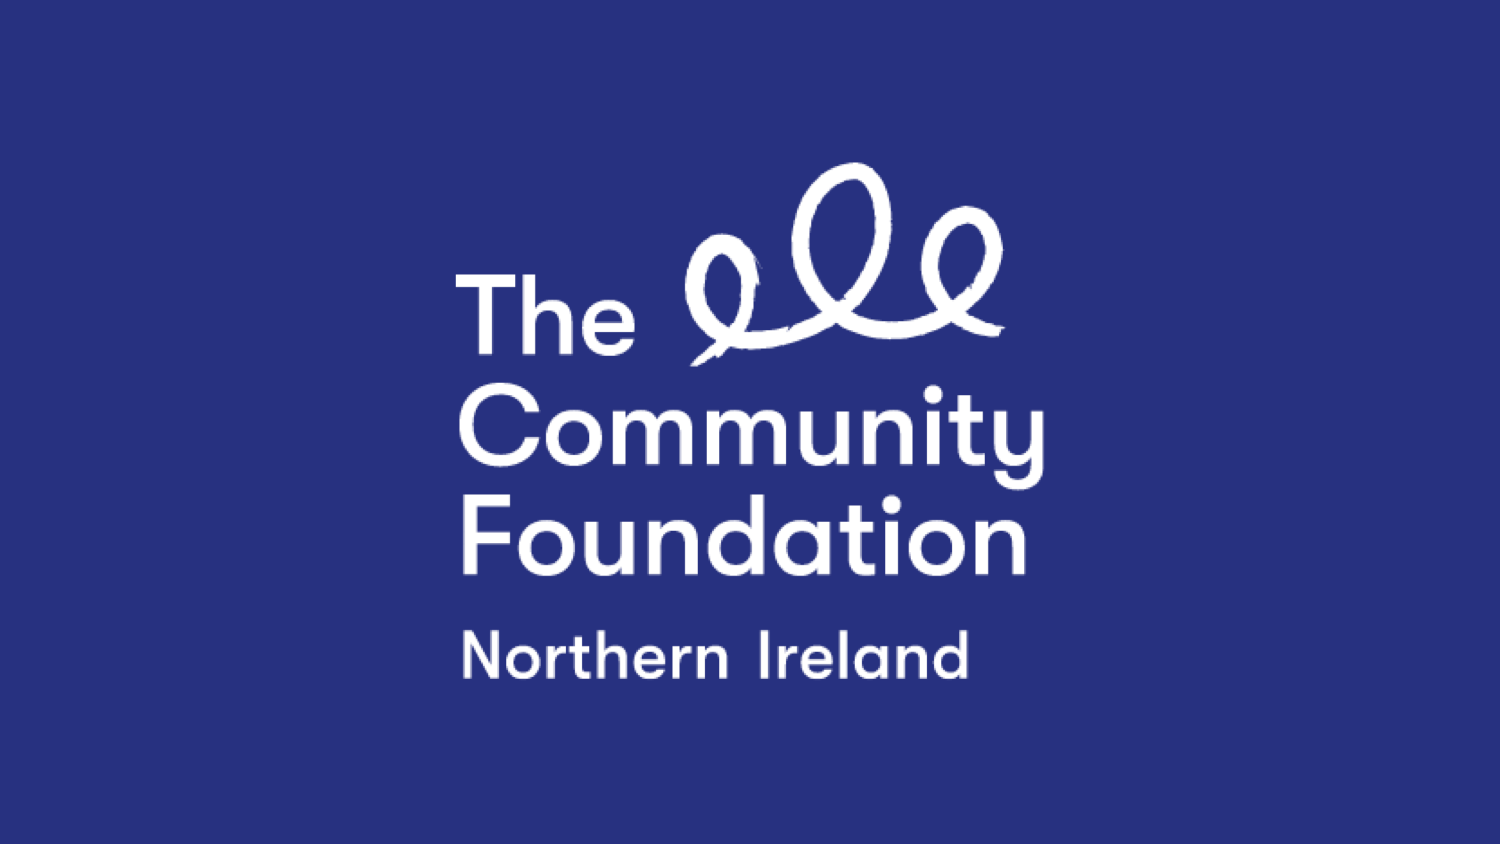 Community Foundation achieves Quality Accreditation